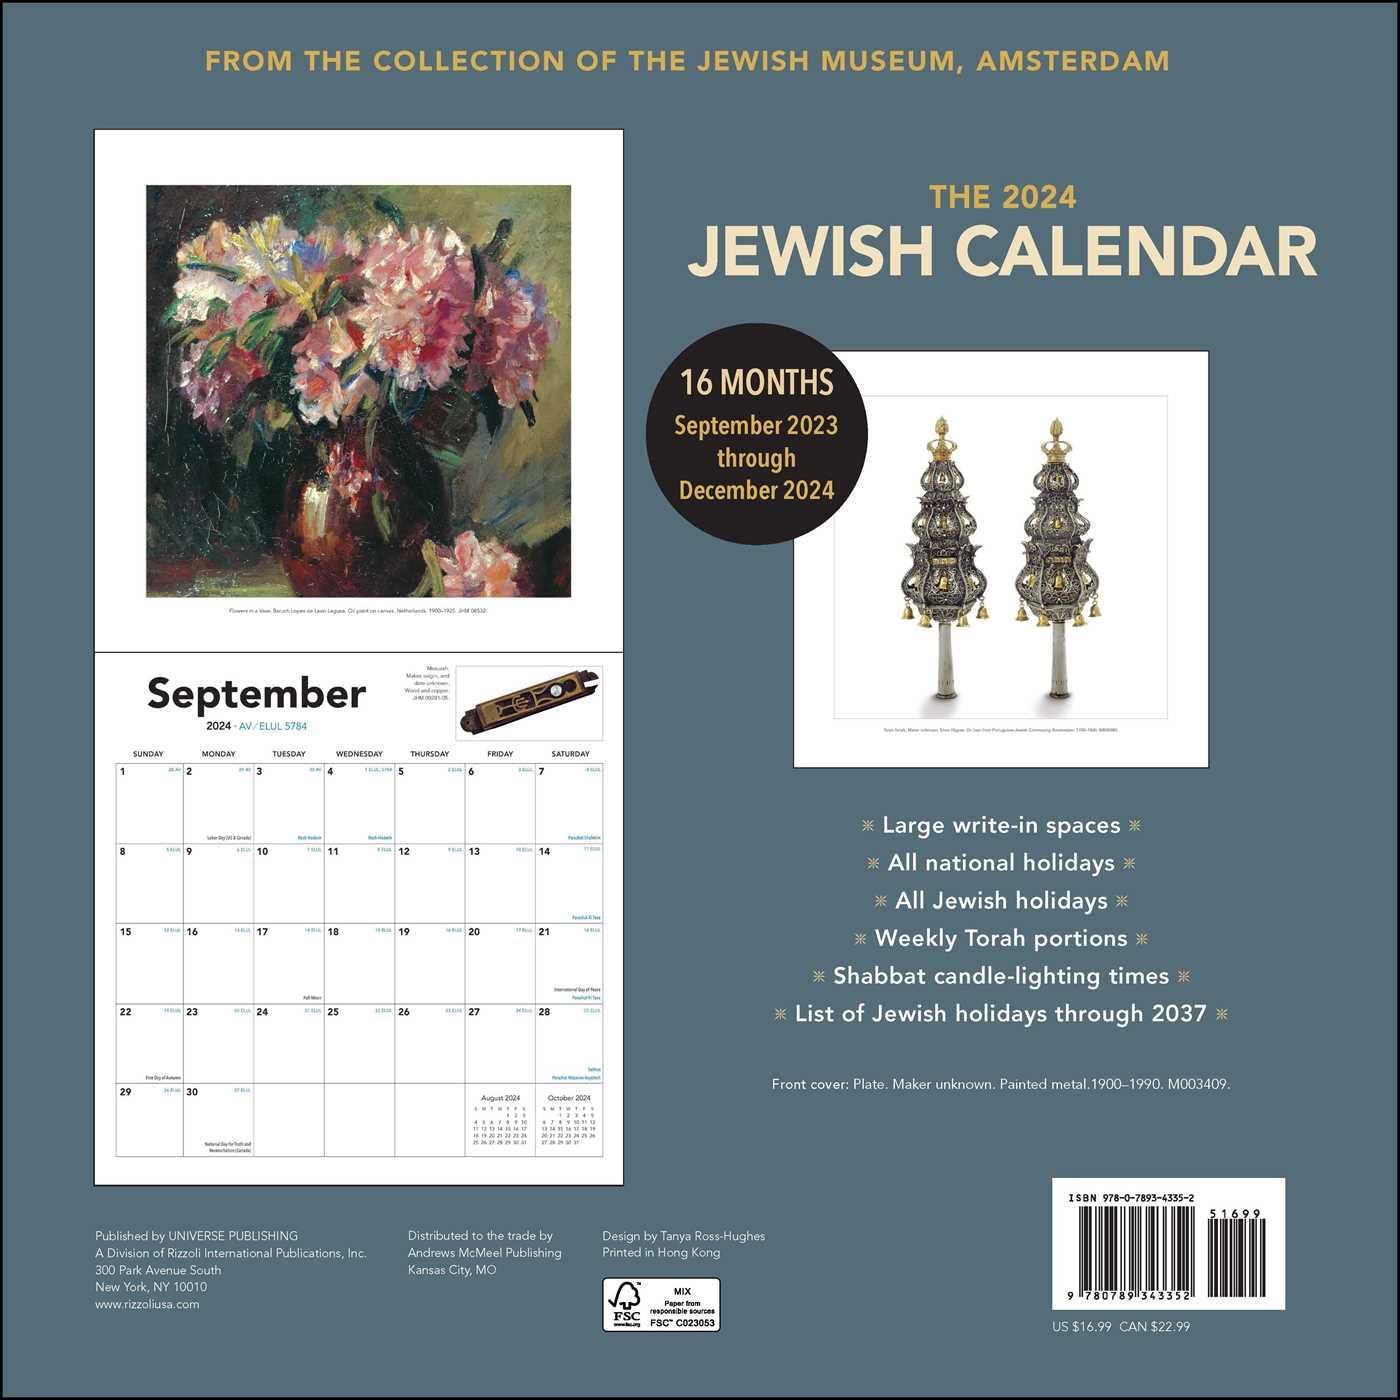 The  2024 (5784) Jewish Calendar